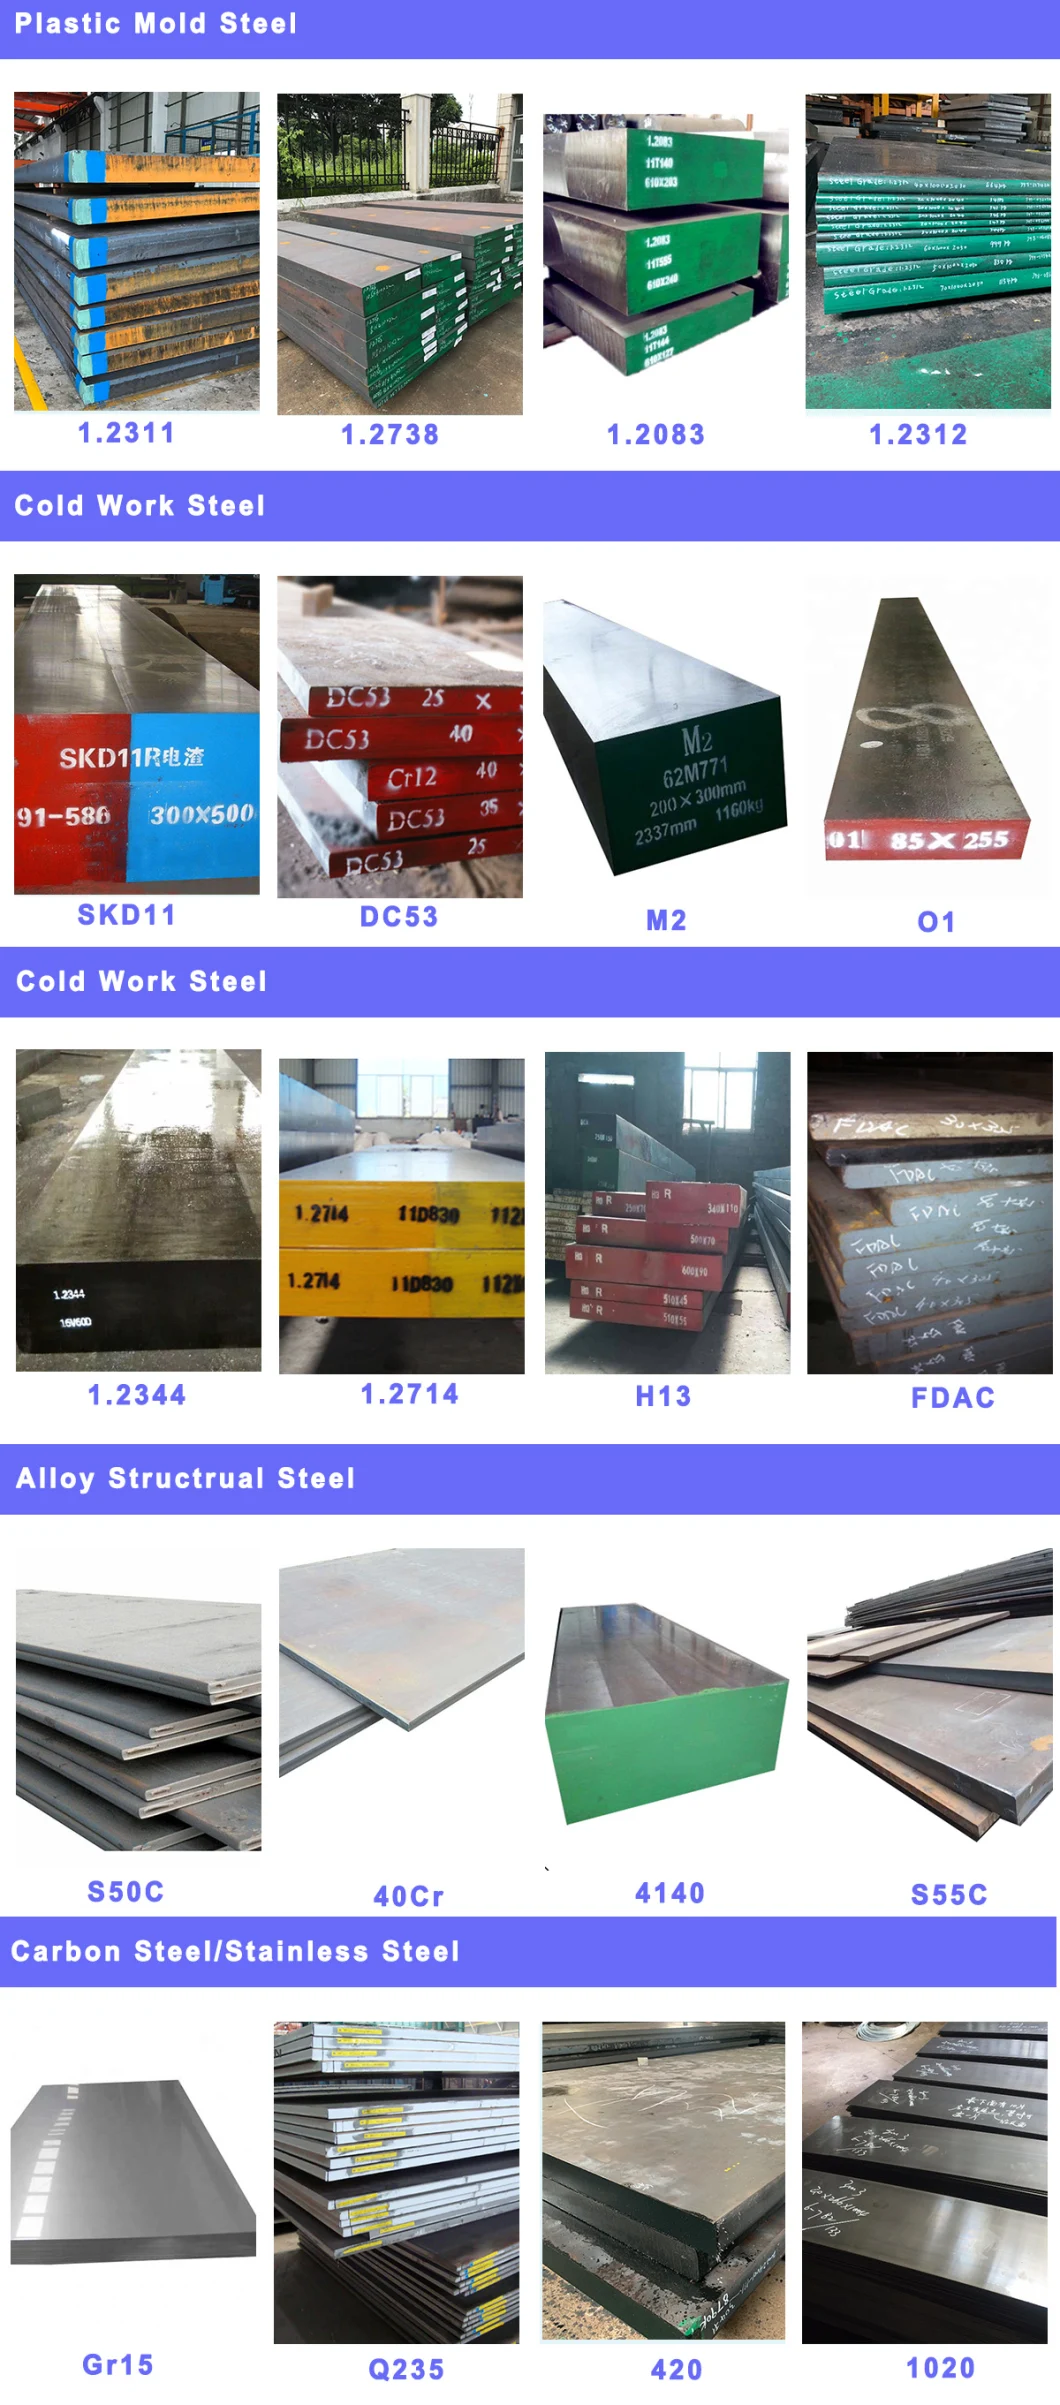 Ground Flat Steel Tool and Die Steel 1.2313 Plastic Mold Base Block Alloy Steel Flat Bar